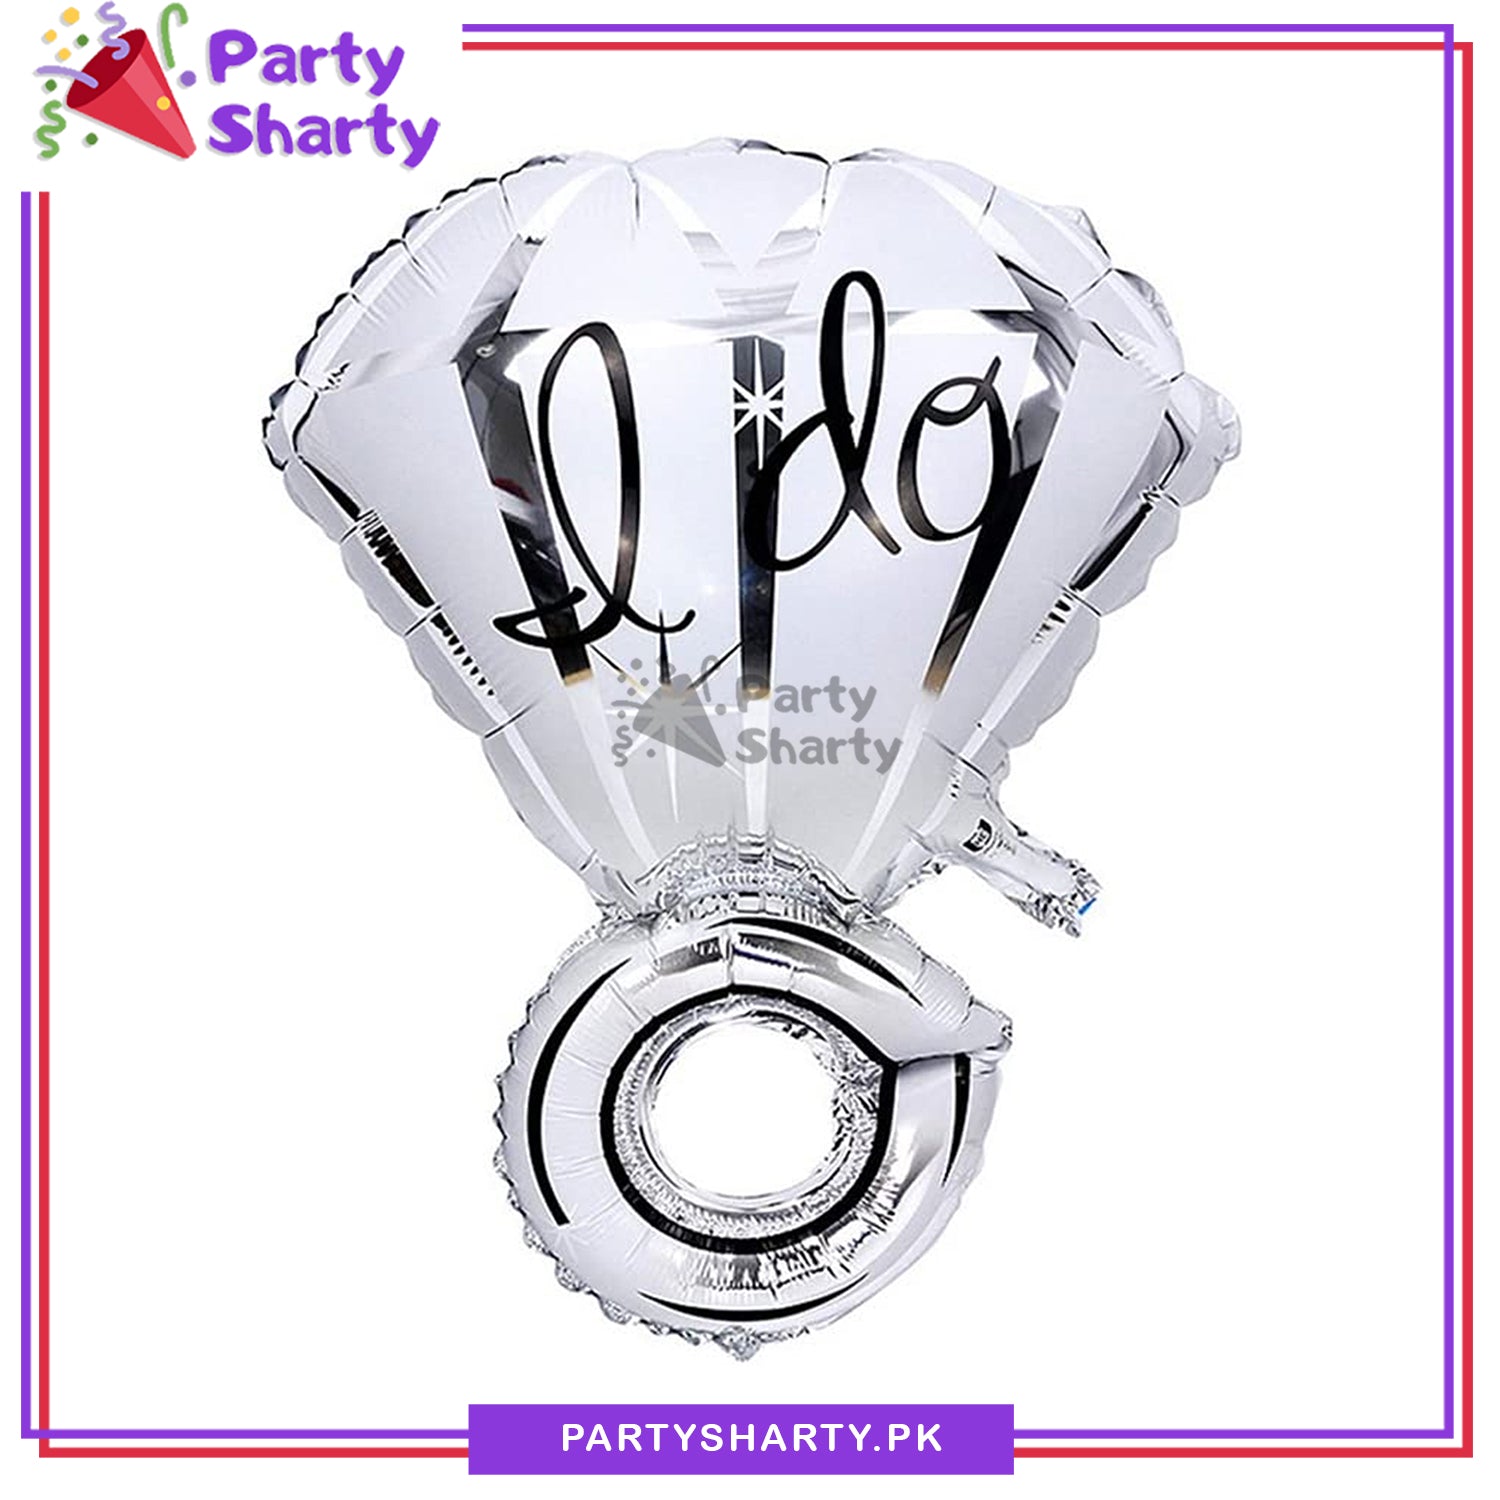 I DO Ring Shaped Foil Balloon For Wedding, Bridal Shower Decoration and Celebration